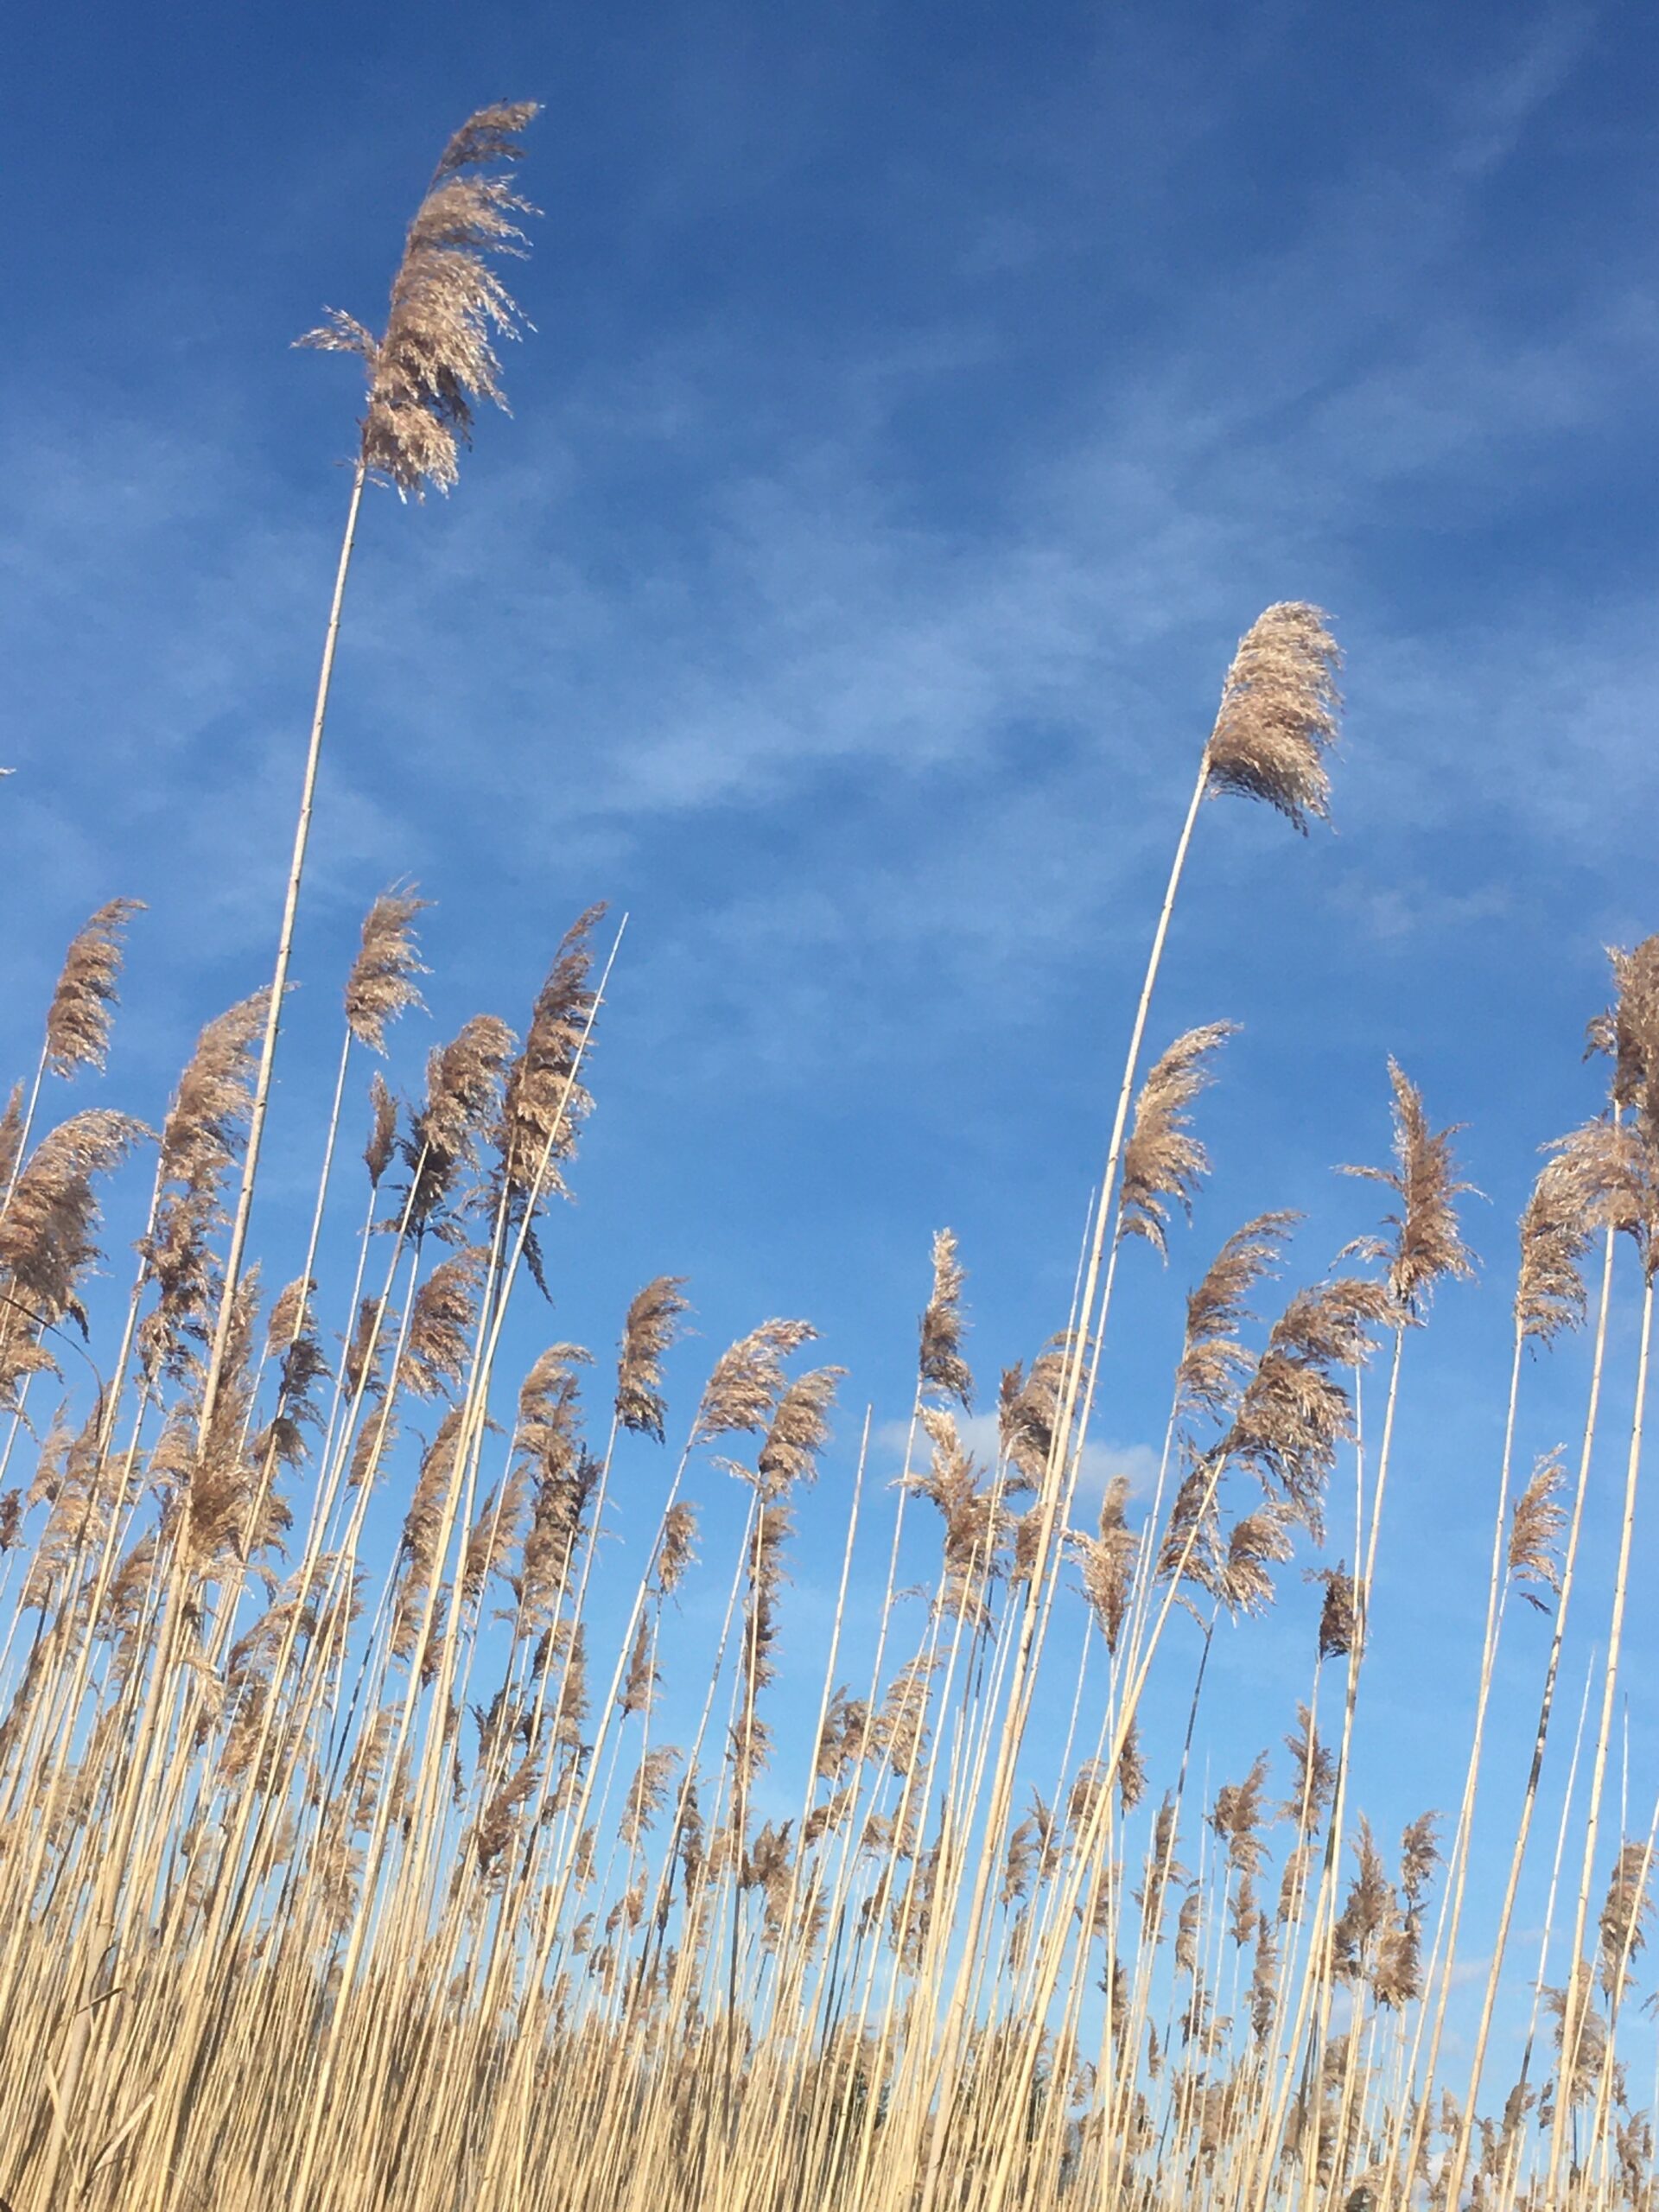 beach grass waving in the autumn wind against a clear blue sky